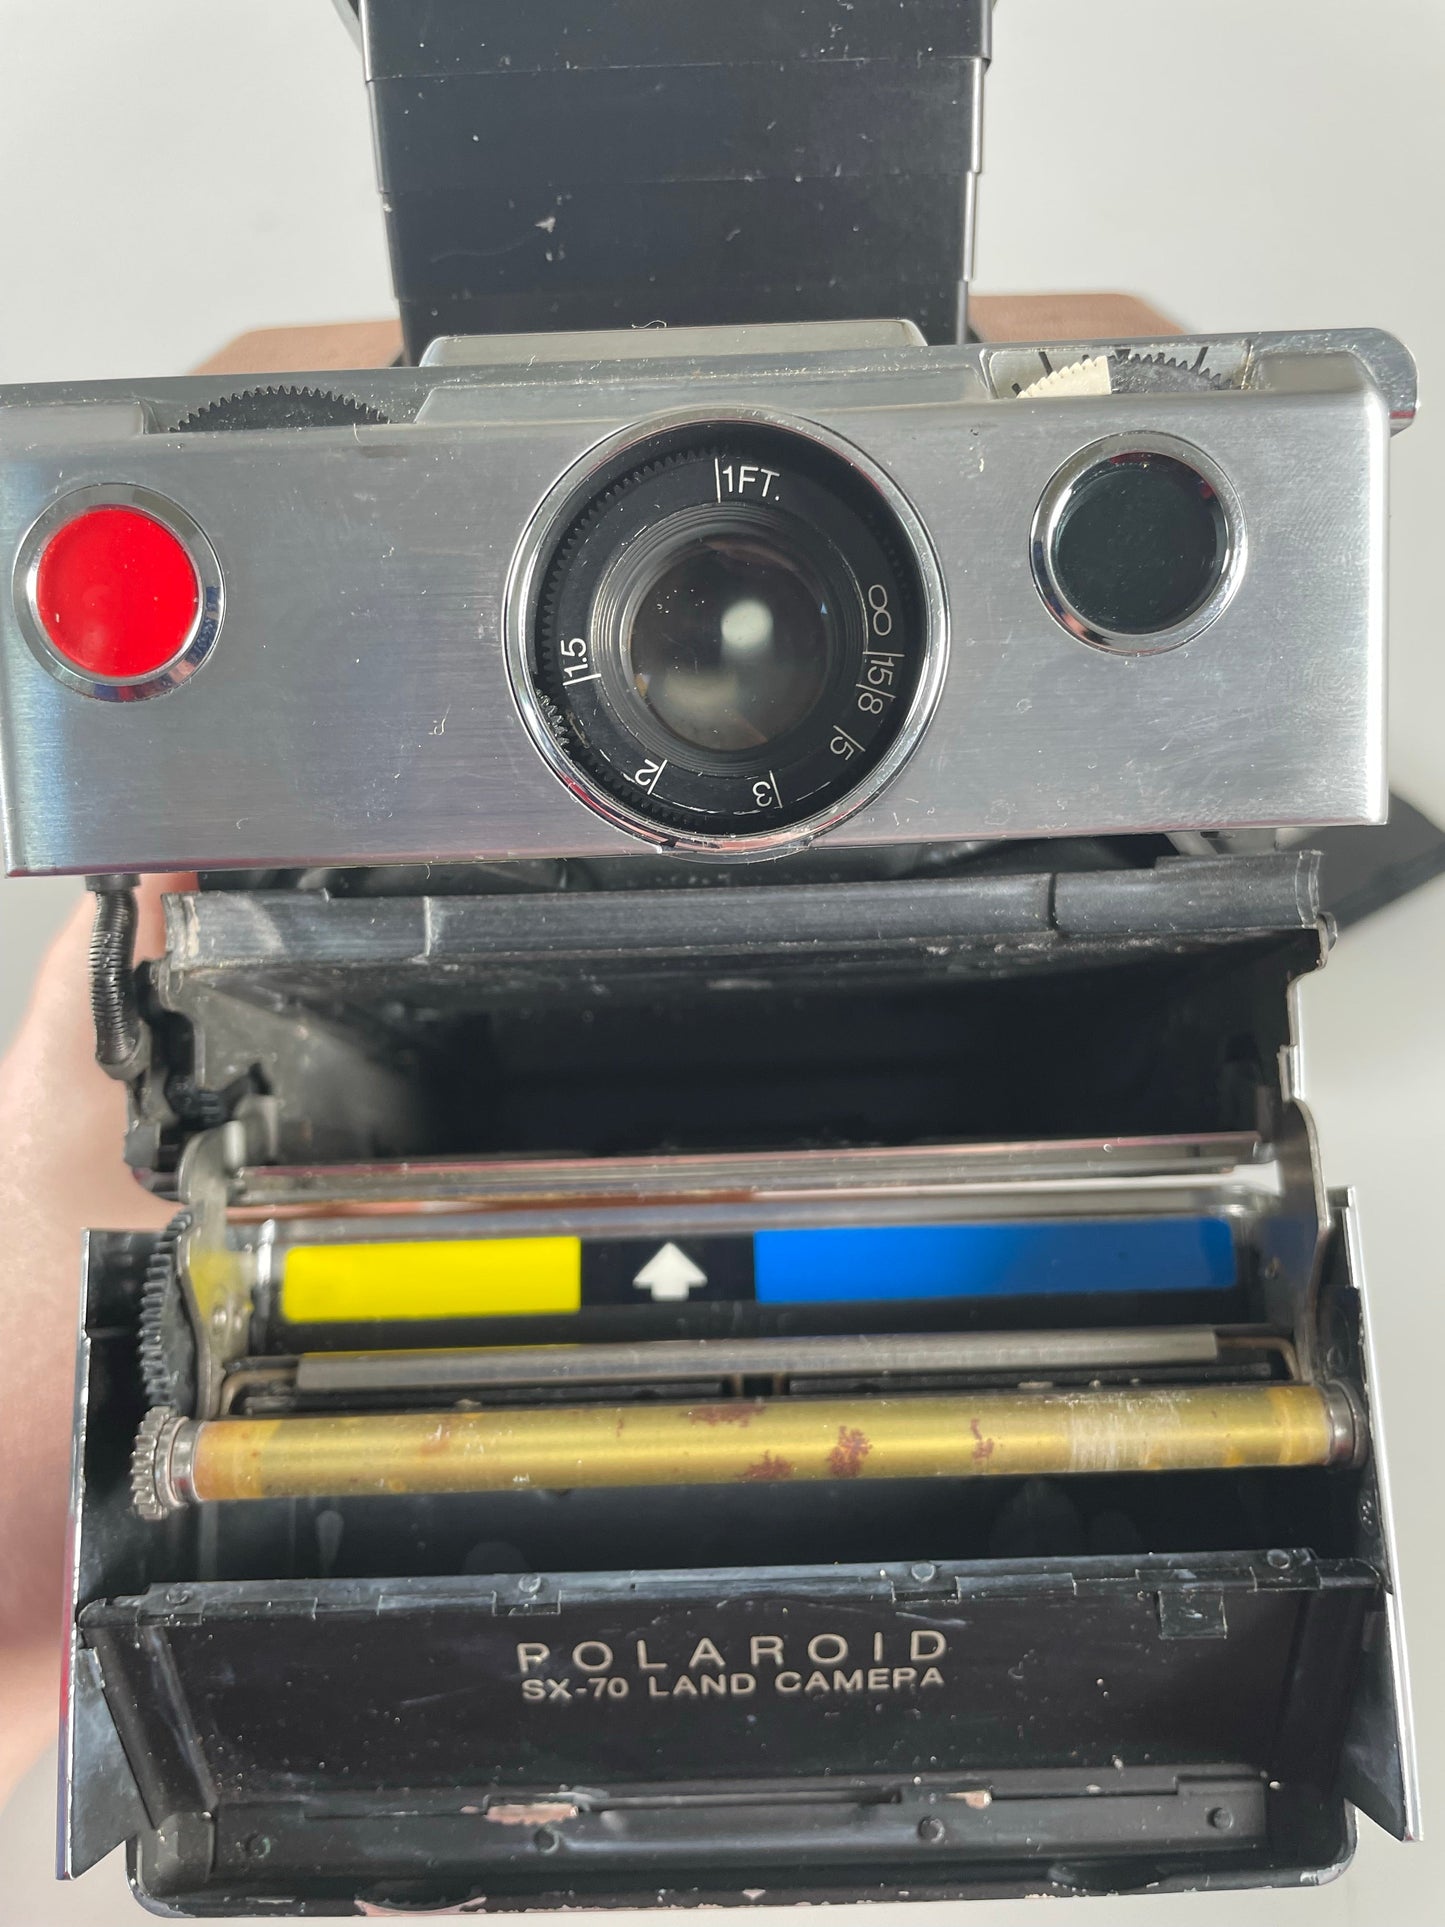 Polaroid SX-70 film land camera tan and chrome